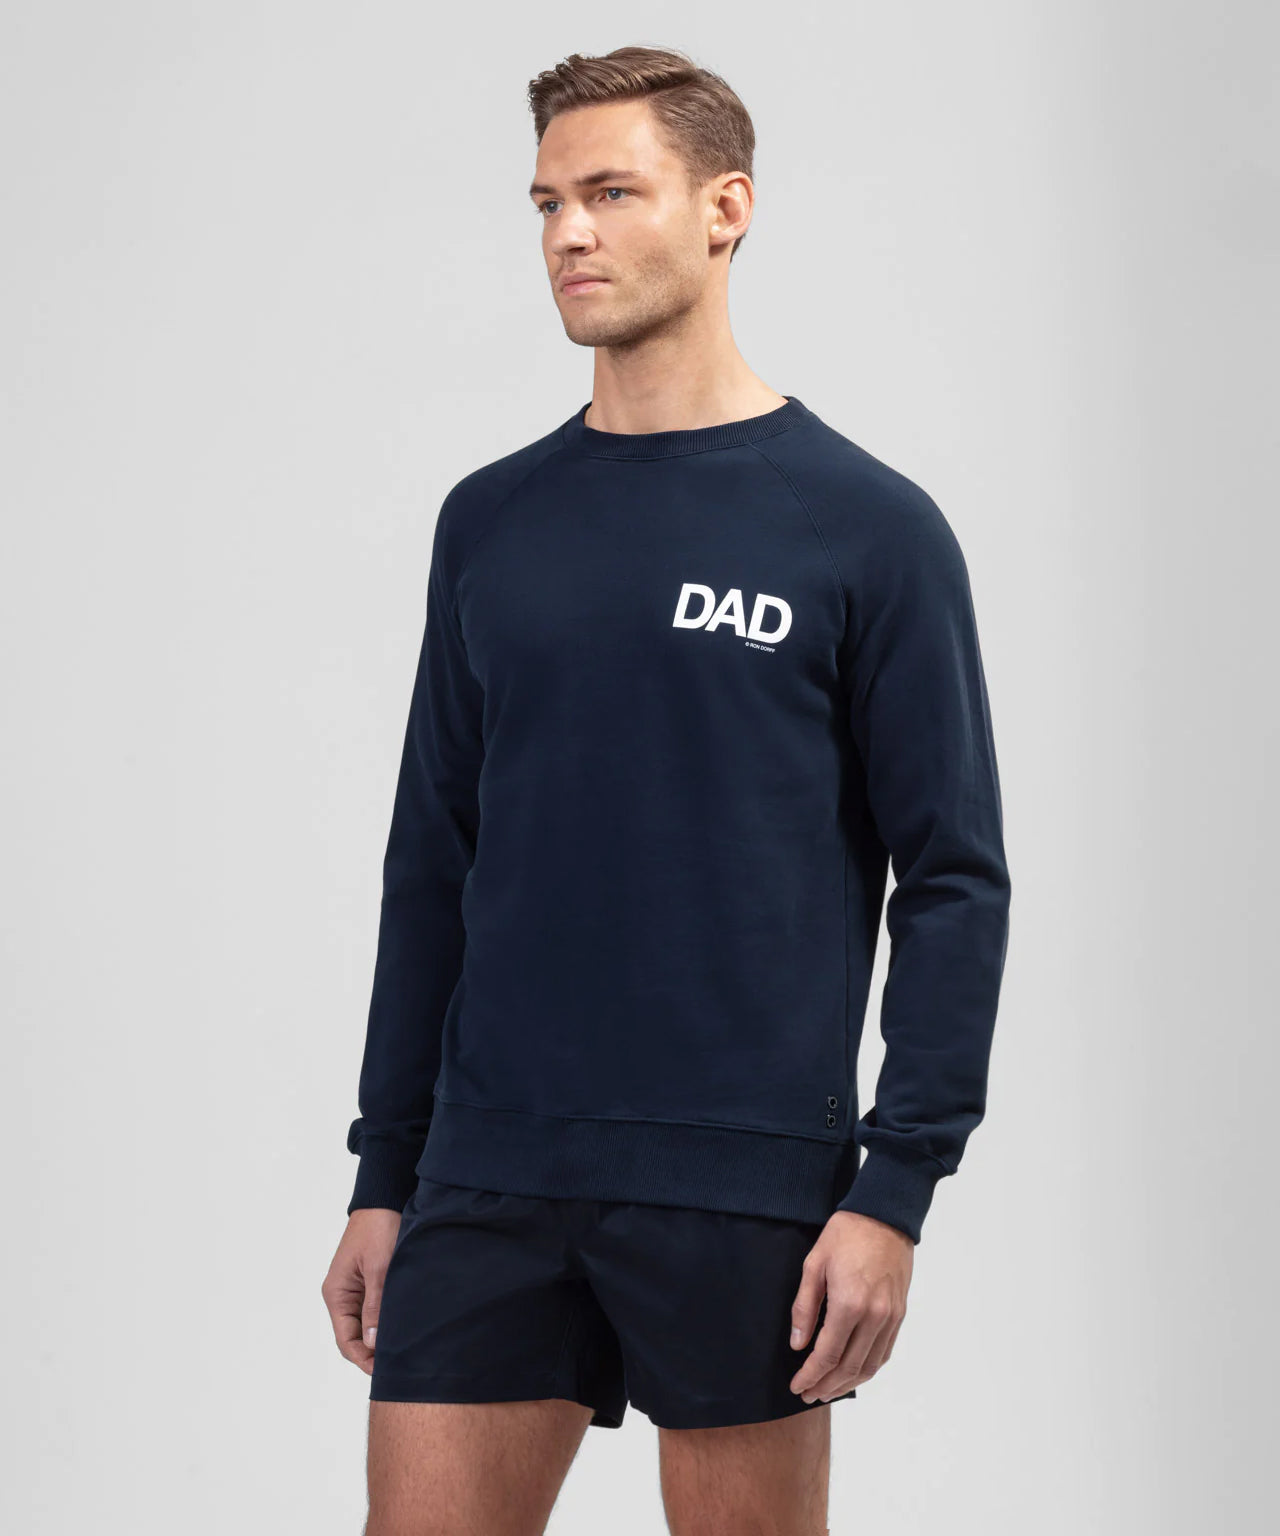 Sweatshirt en coton organique à imprimé DAD: Bleu marine